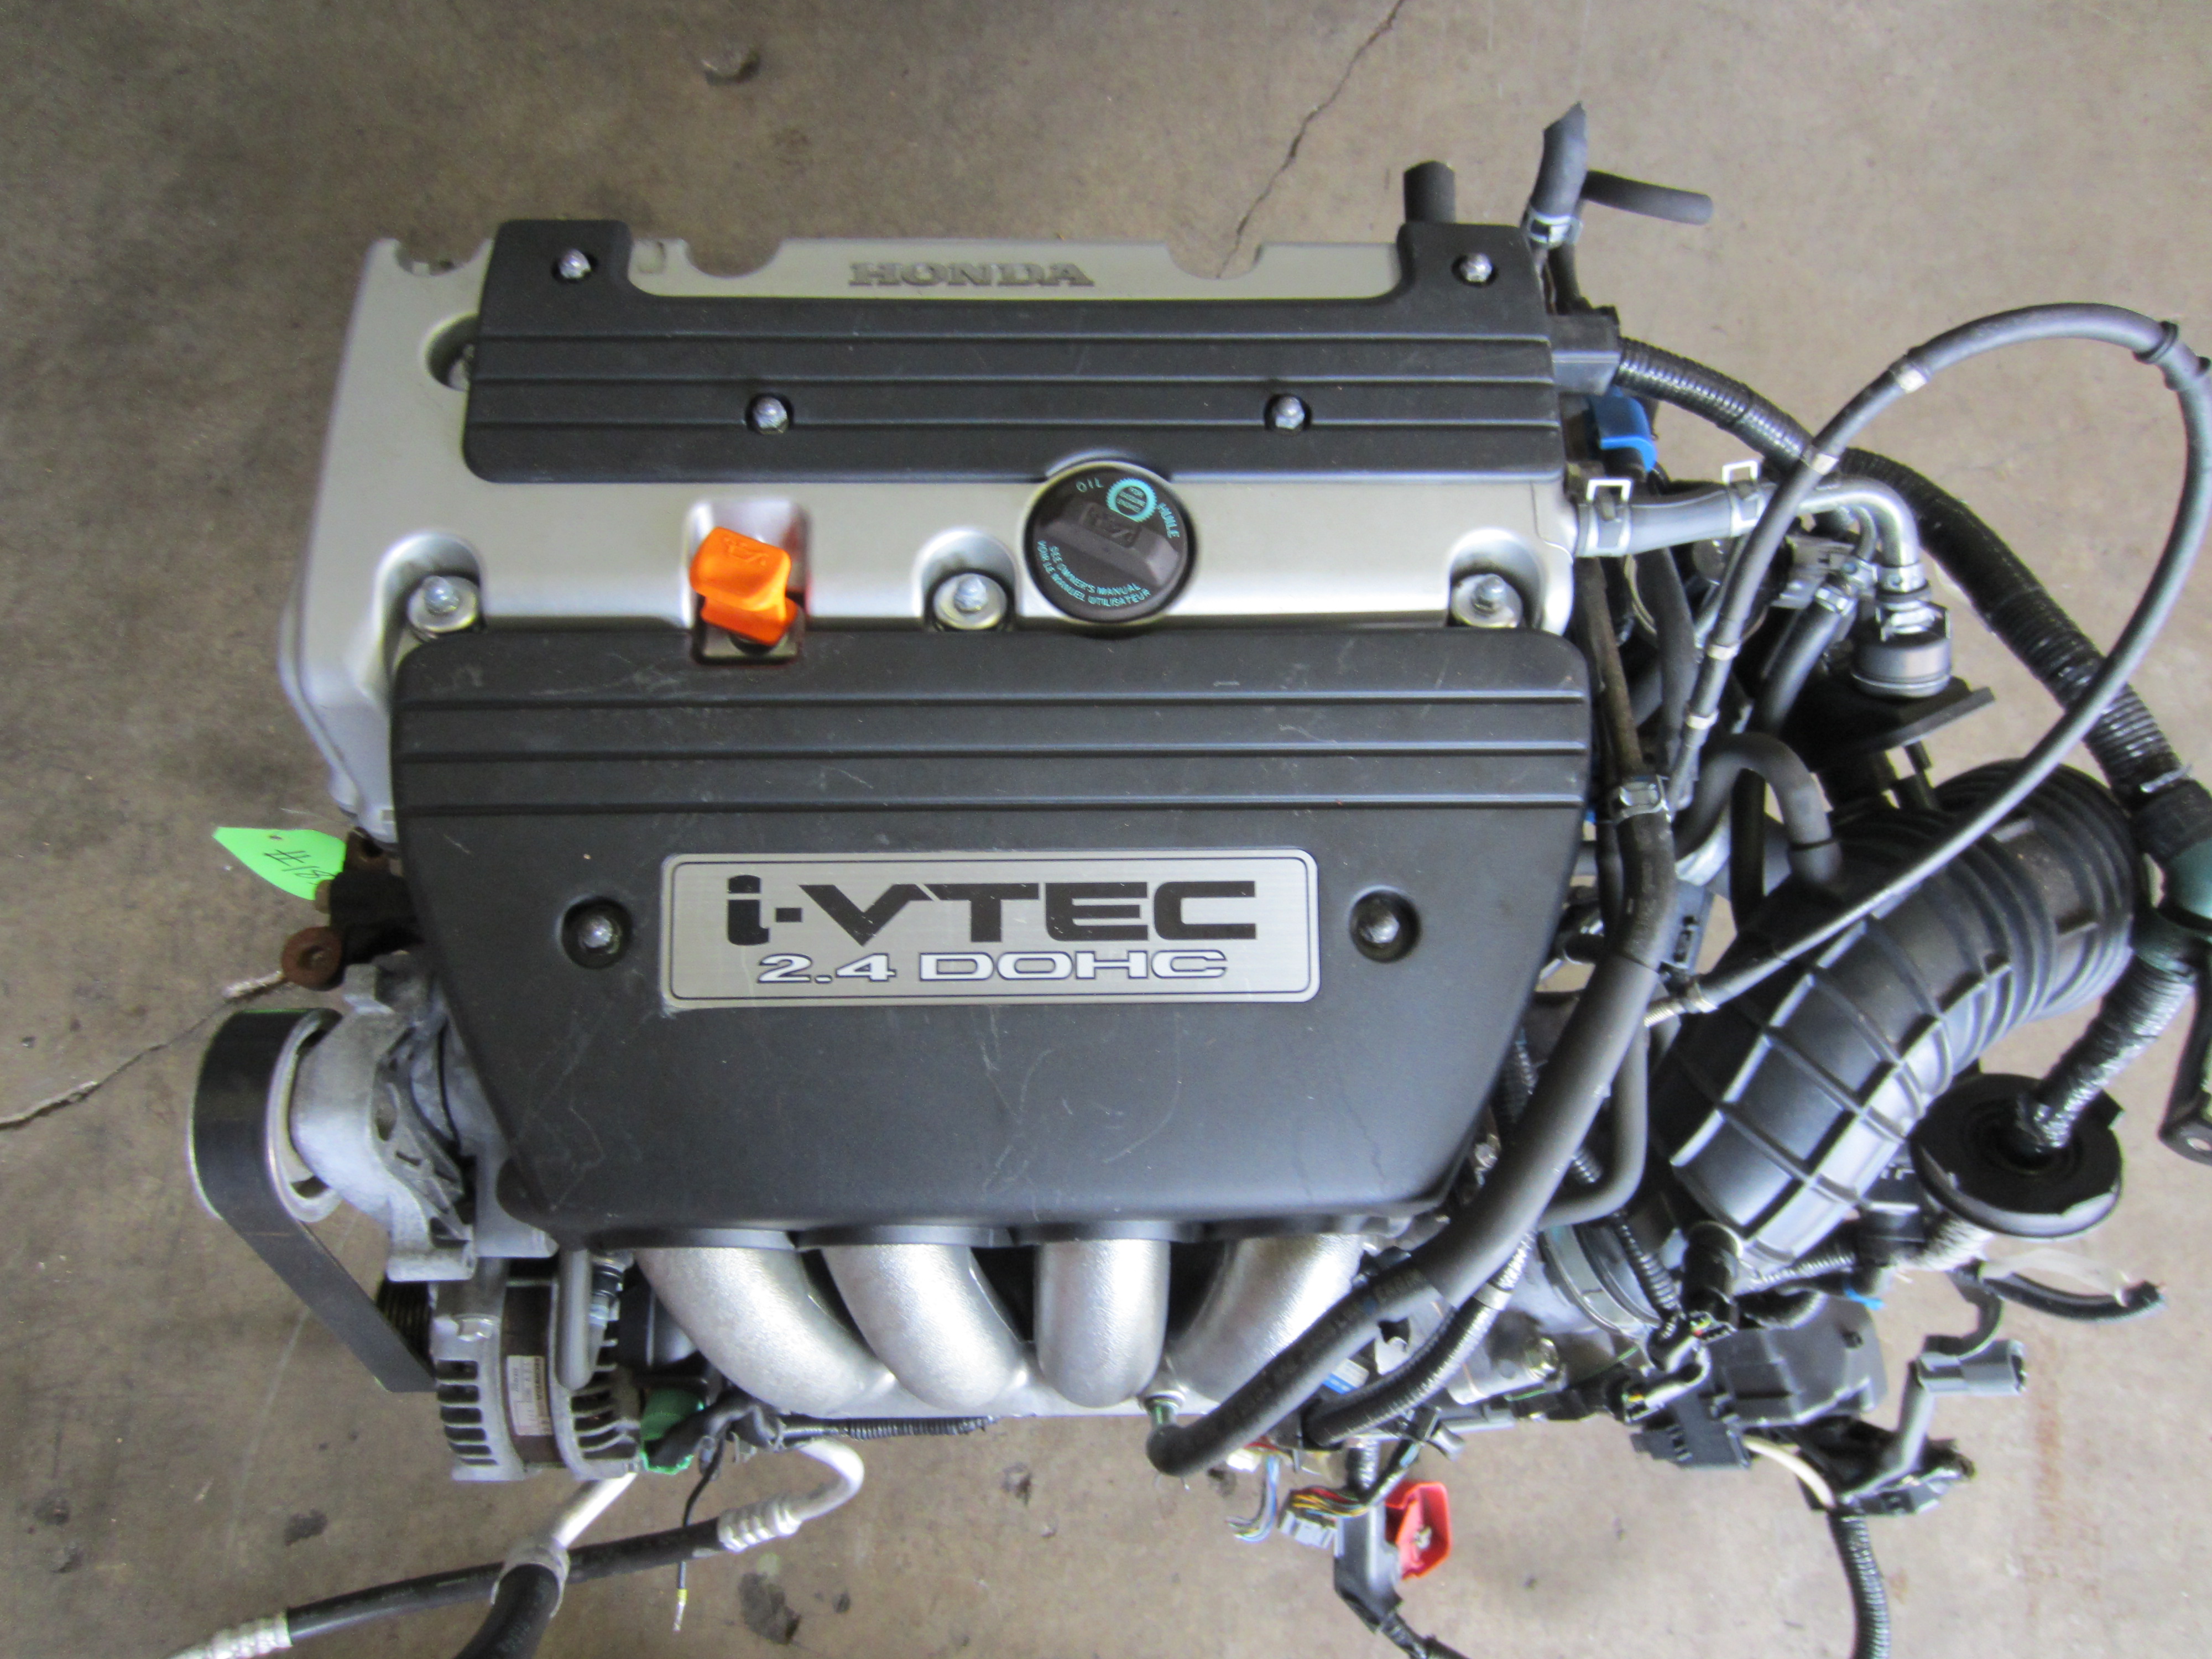 Honda двигатели 2 4. Honda 2.4 k24 i-VTEC. Мотор к24 Хонда 2.4. Мотор k24a Accord. Двигатель Honda k24z4.